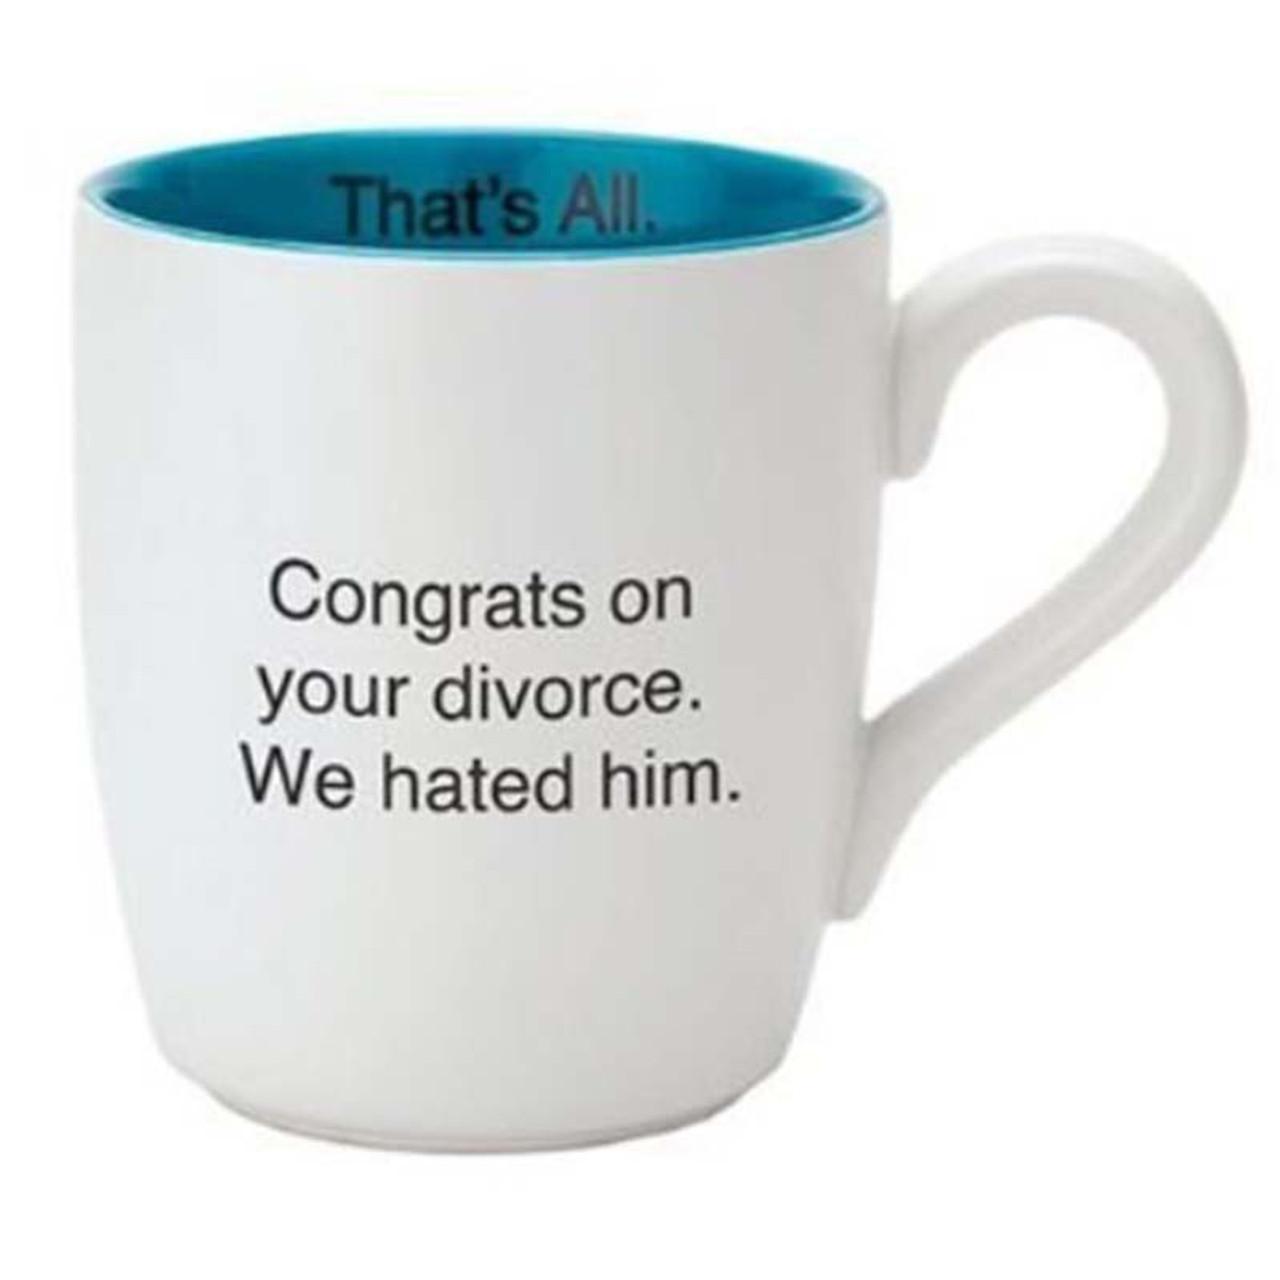 That's All Mug - We Hated Him